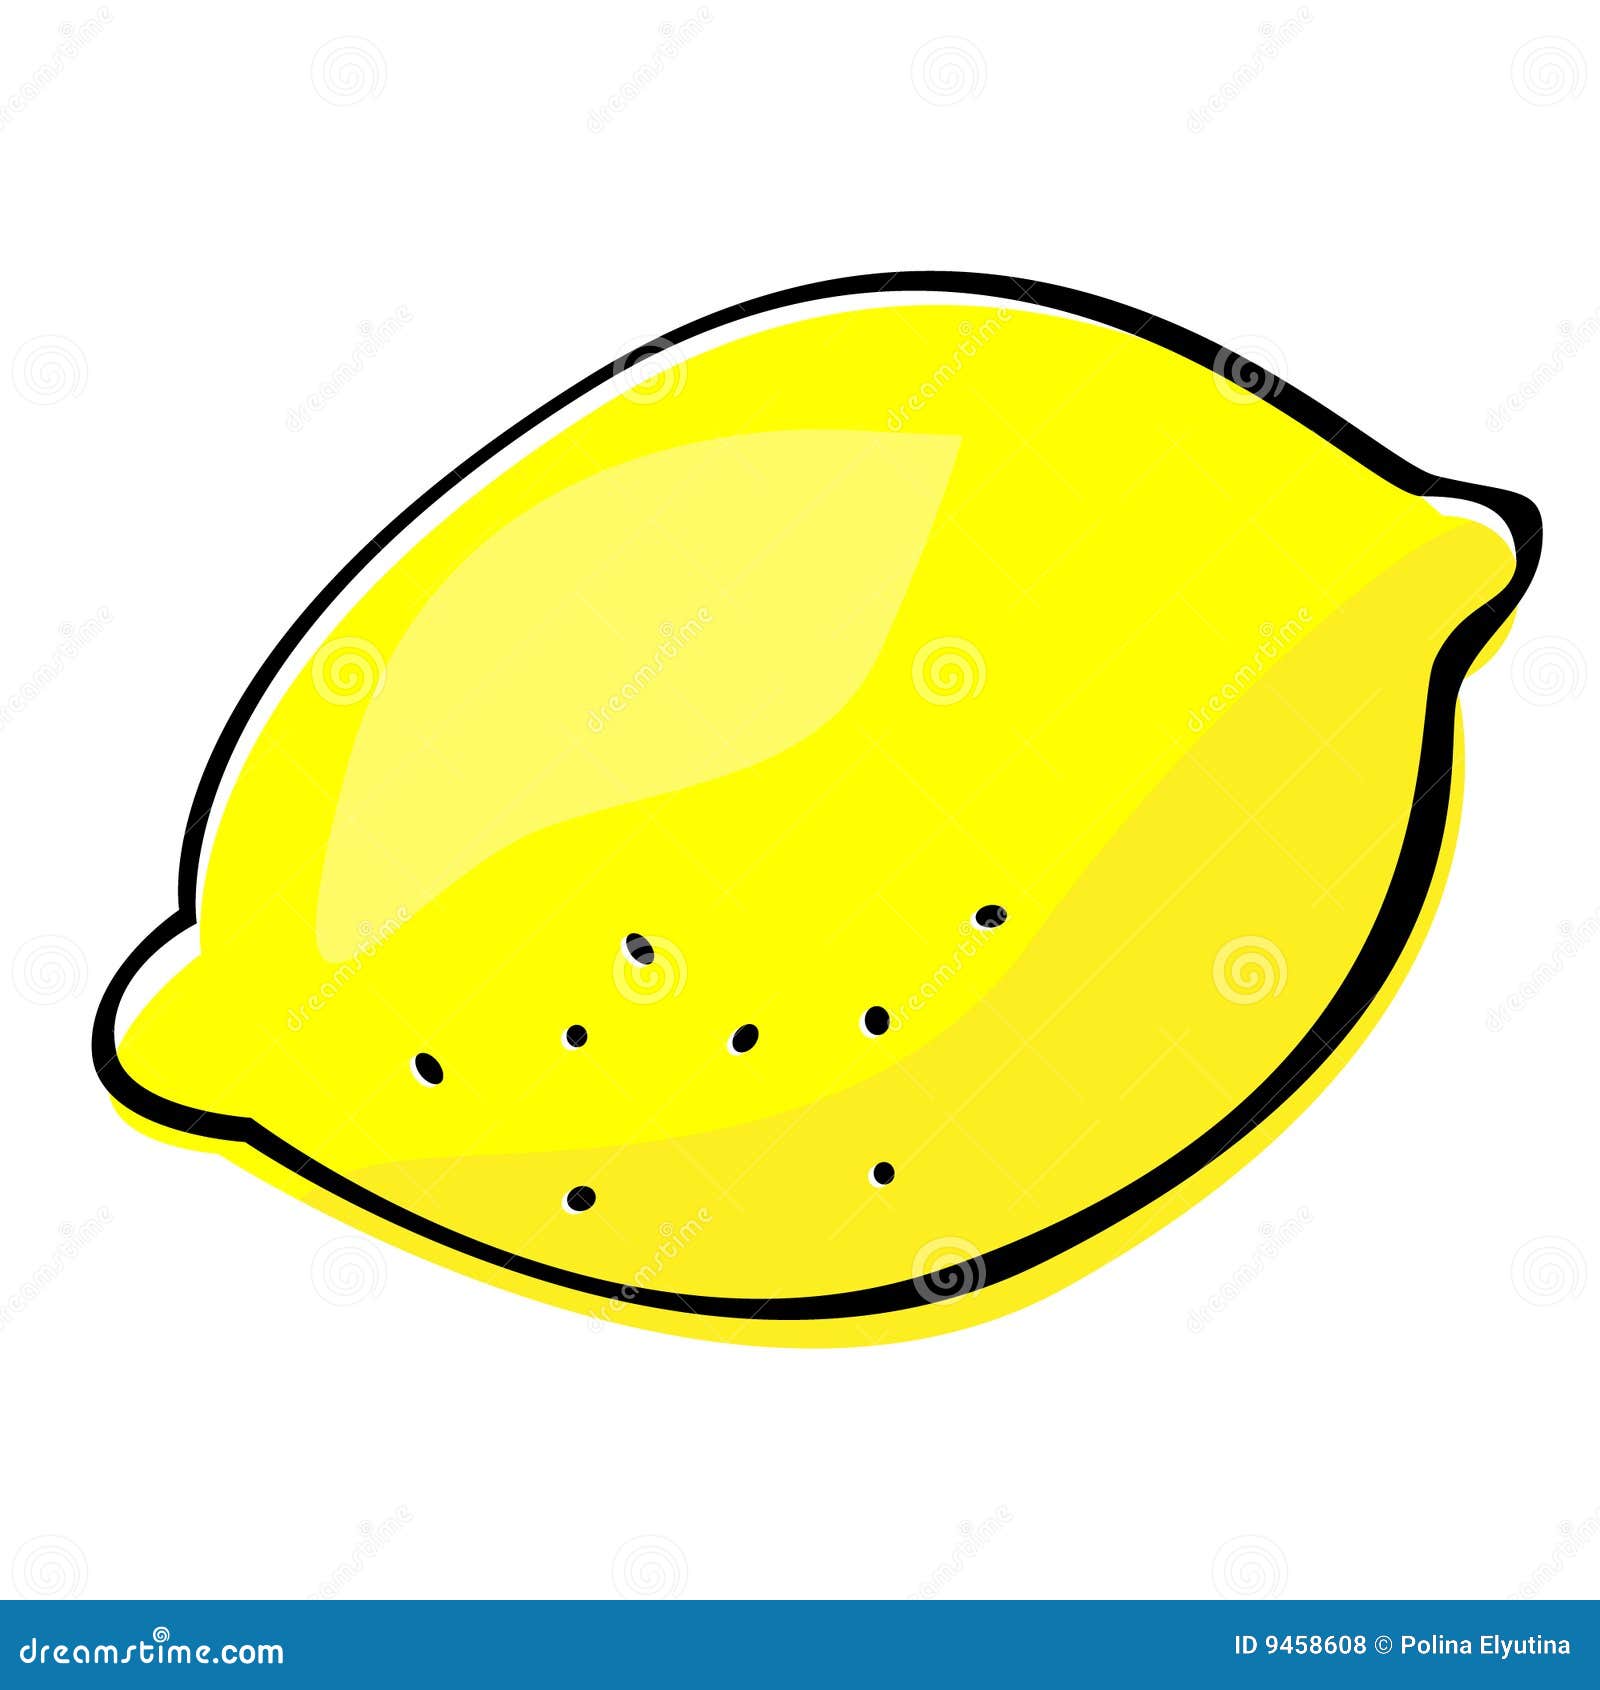 yellow lemon clipart - photo #24